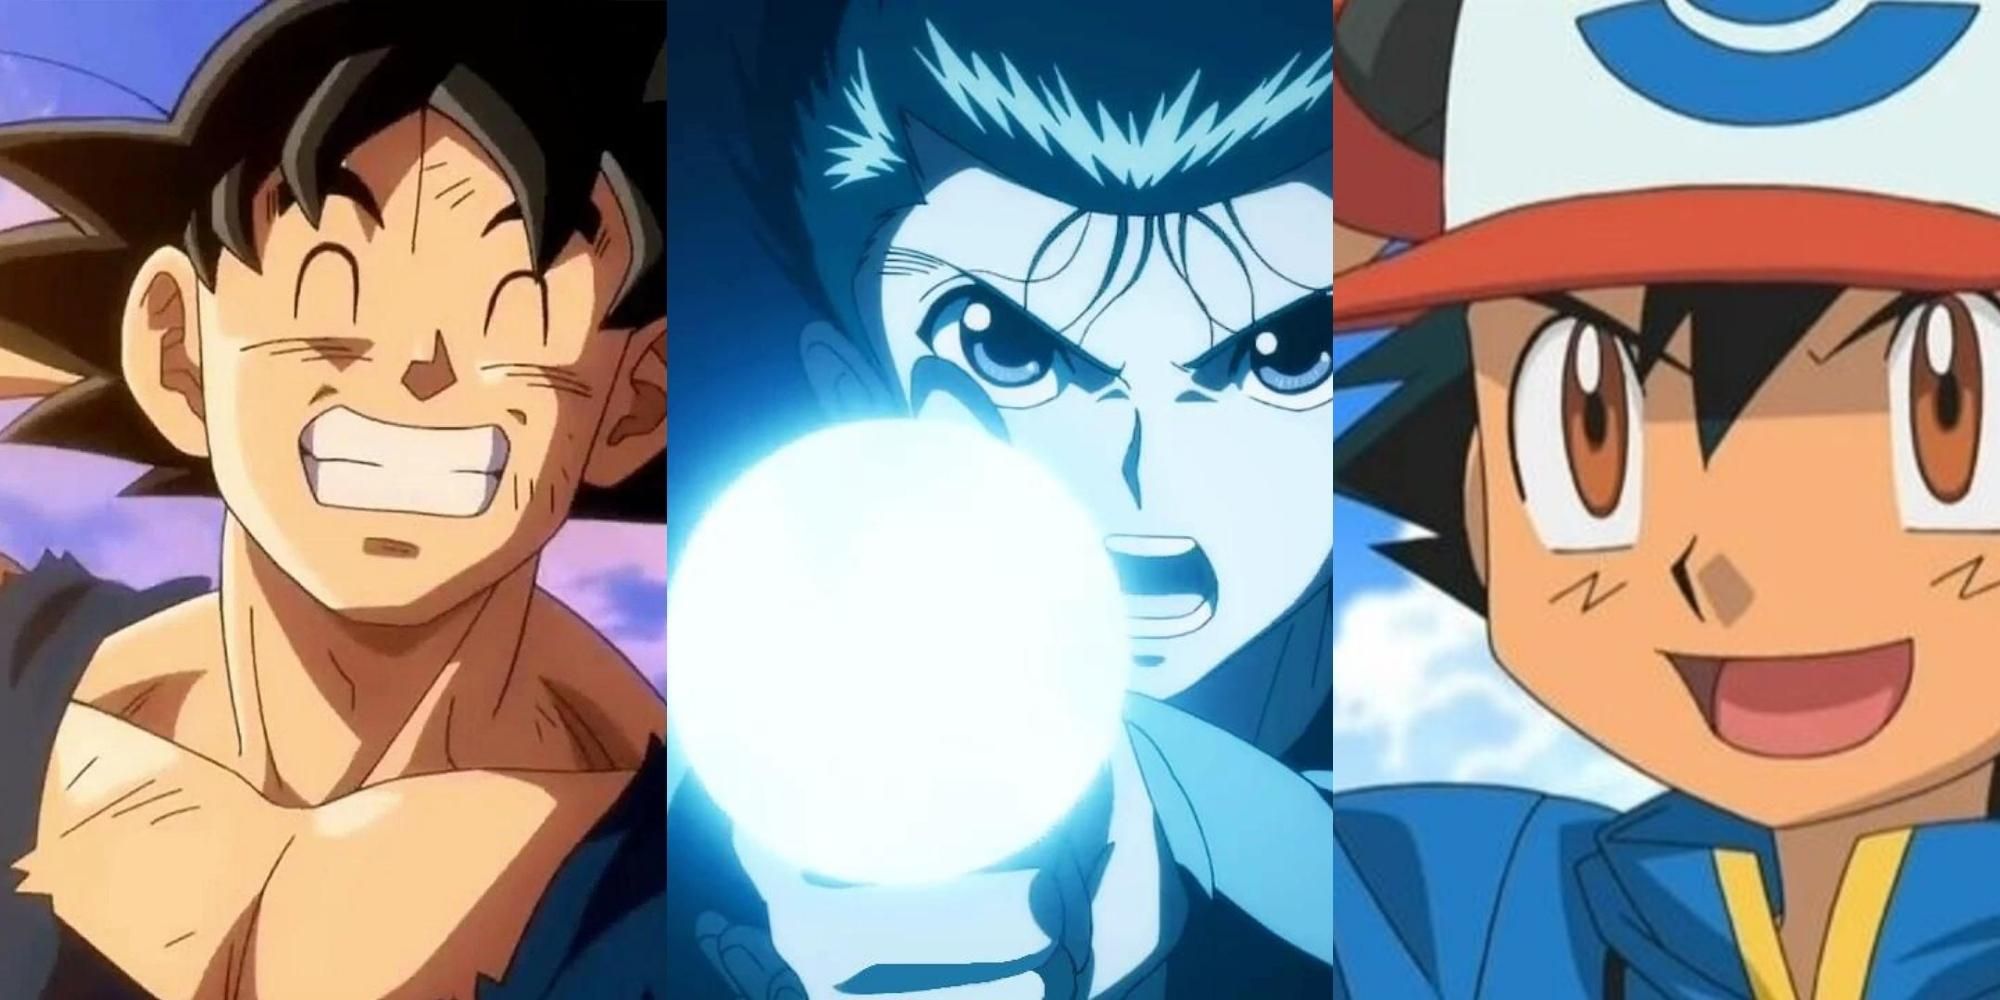 Son Goku in Dragon Ball, Yusuke Urameshi in Yu Yu Hakusho, Ash Ketchum in Pokemon